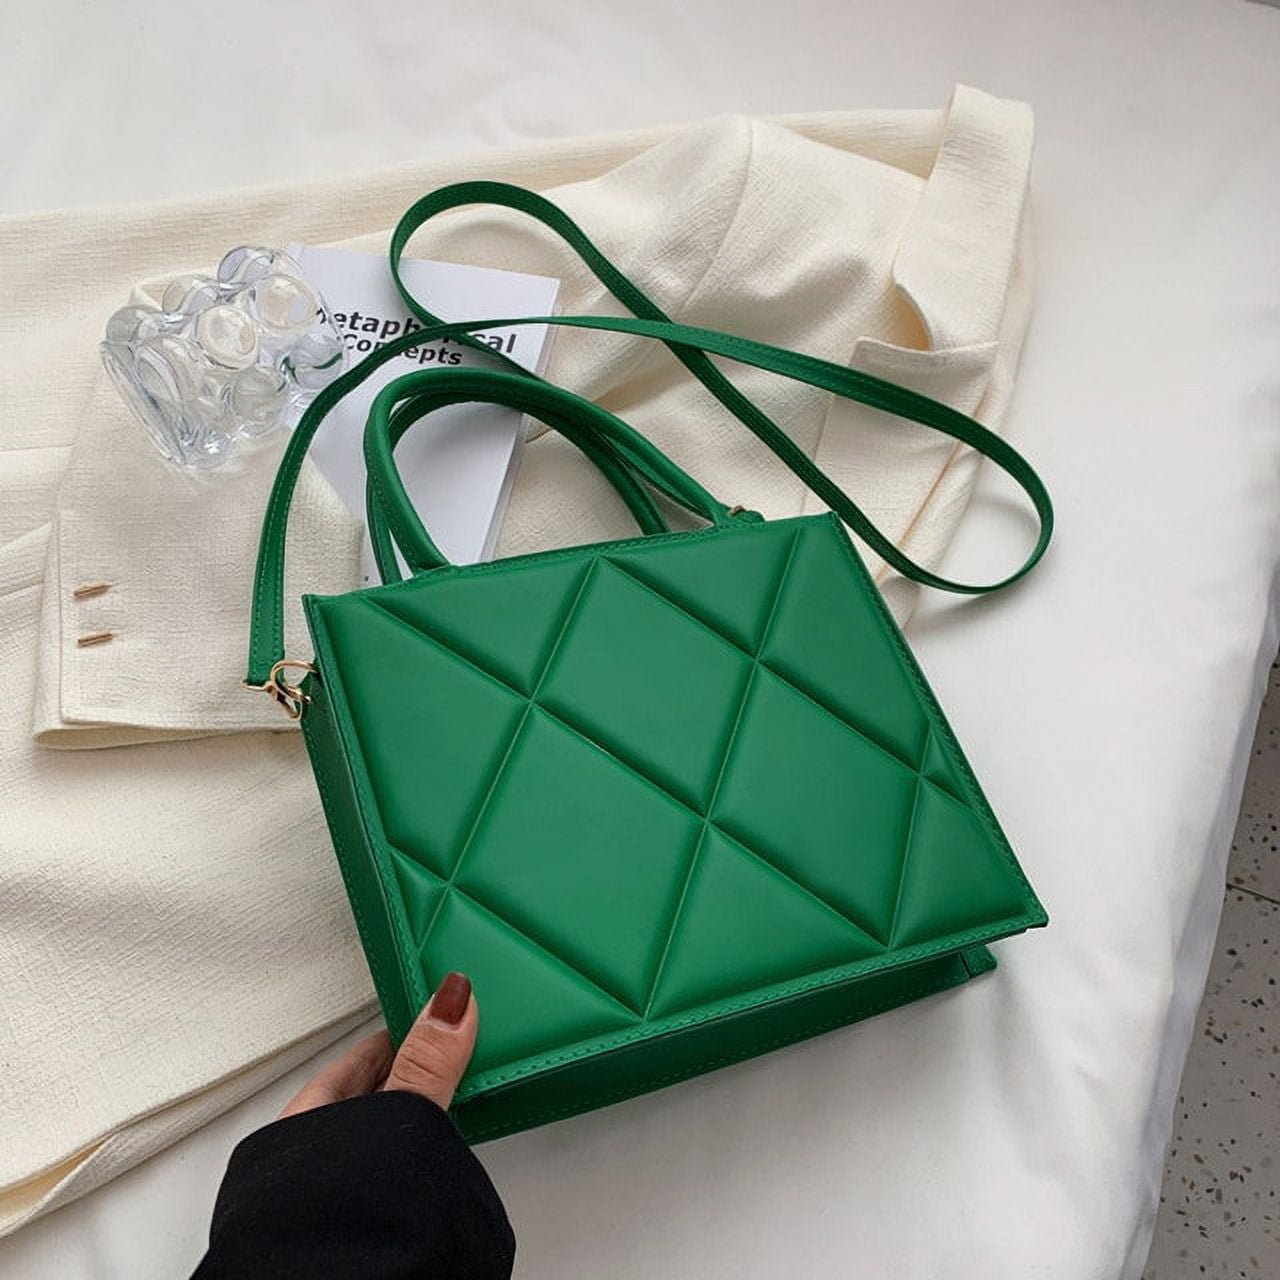 Brand New Crossbody Bags for Women Designer Top-handle Purse 